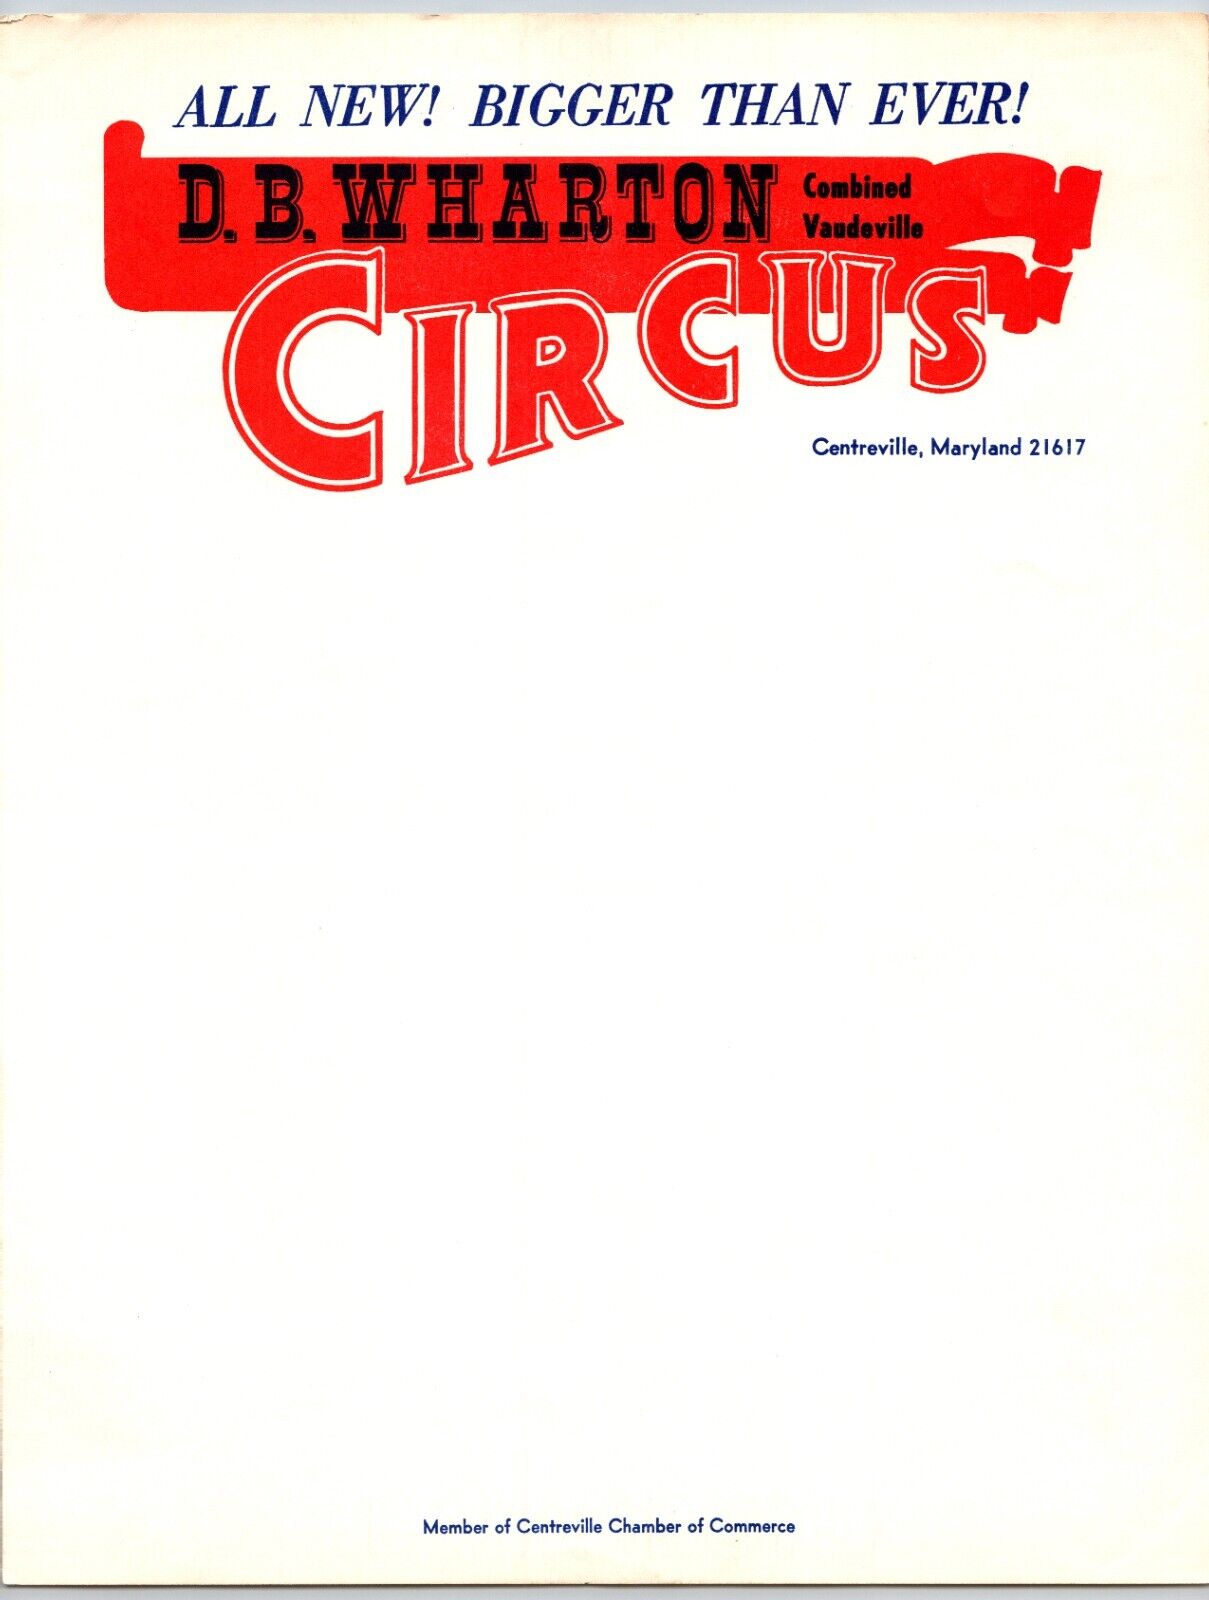 D.B. Wharton Combined Vaudeville Circus Letterhead c1963 Scarce